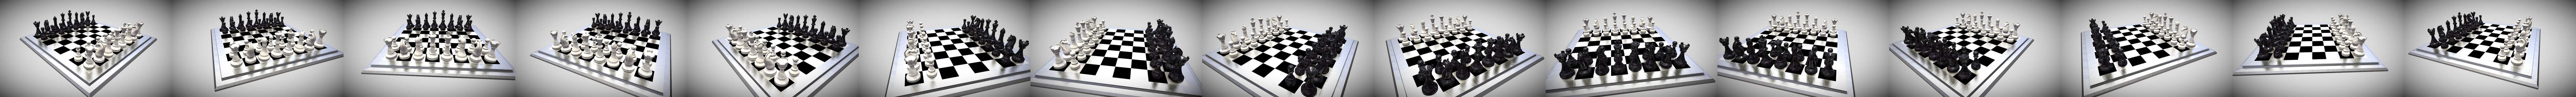 Tablero de ajedrez - Download Free 3D model by Diego Clemente